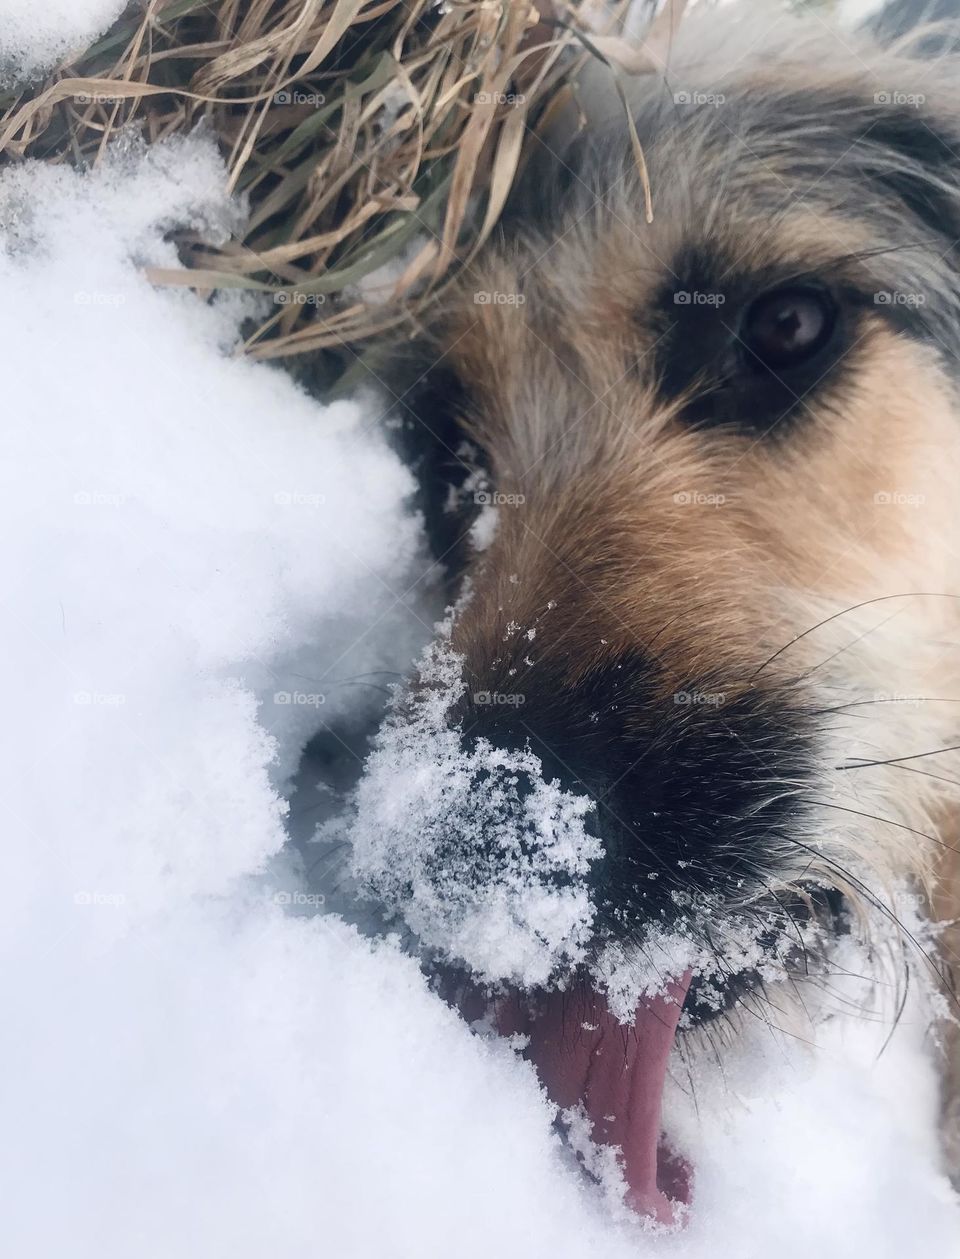 Pup enjoying the snow!